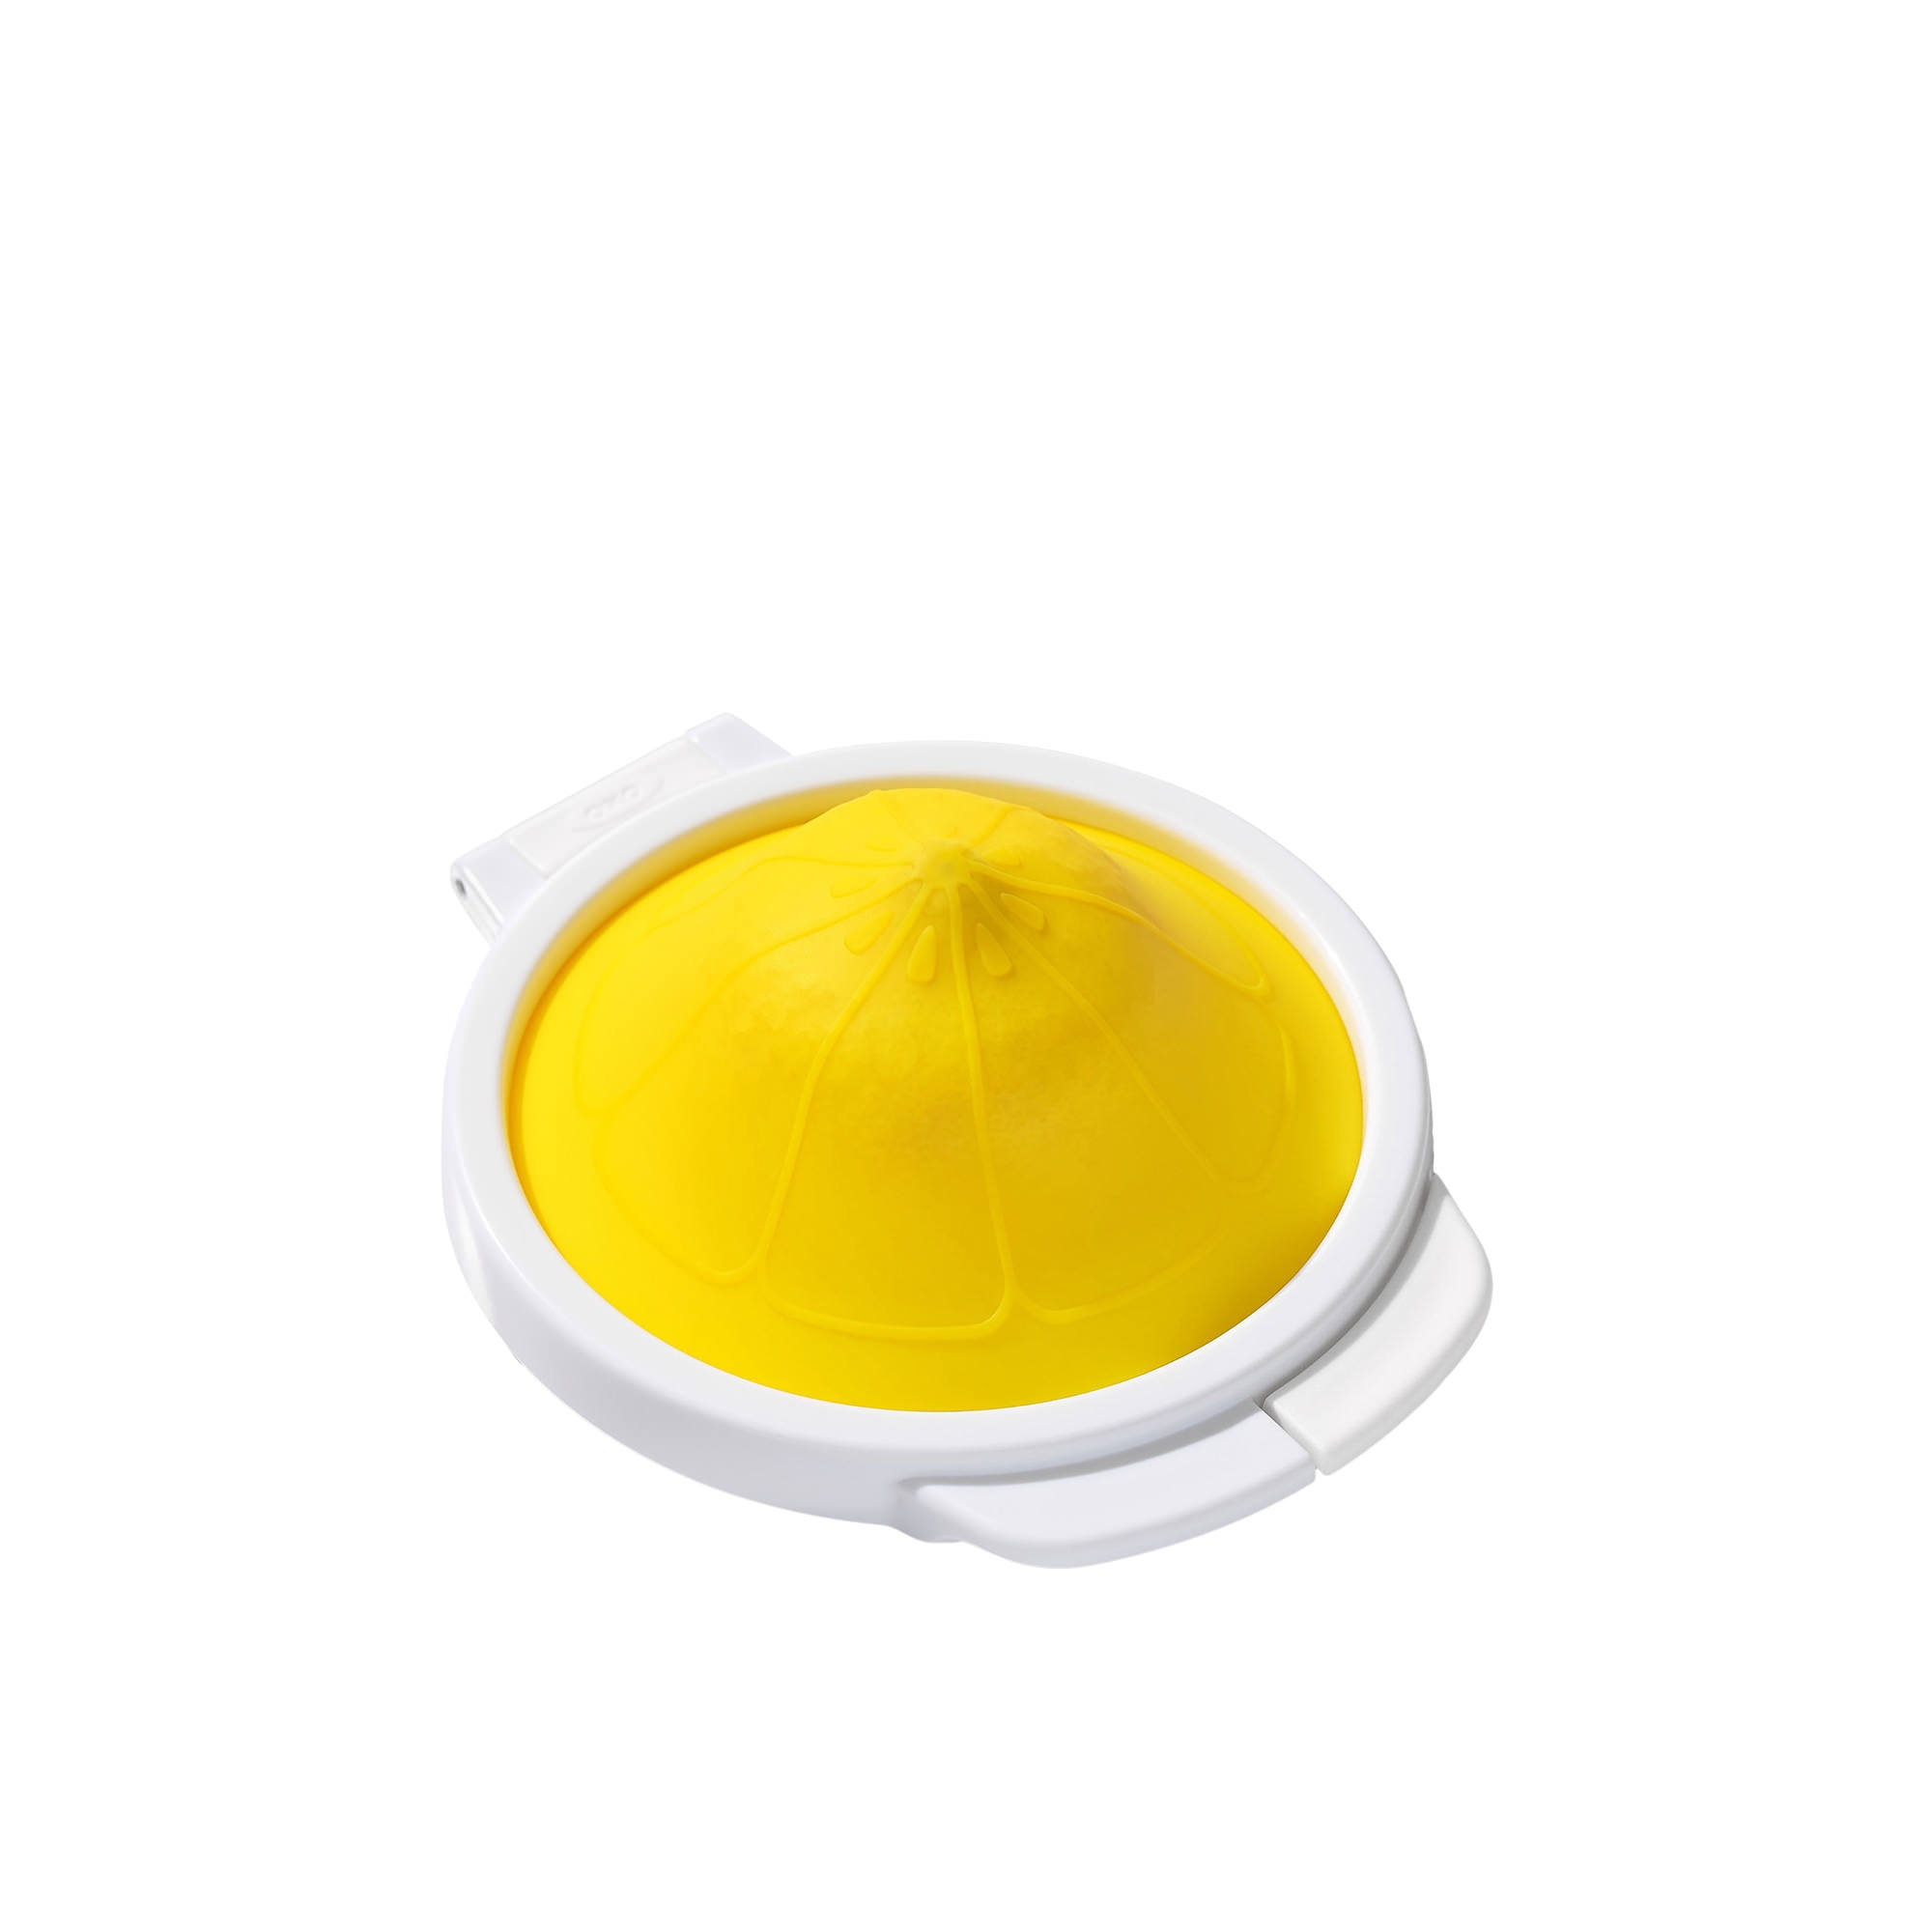 OXO Good Grips Cut & Keep Silicone Lemon Saver Yellow Image 2